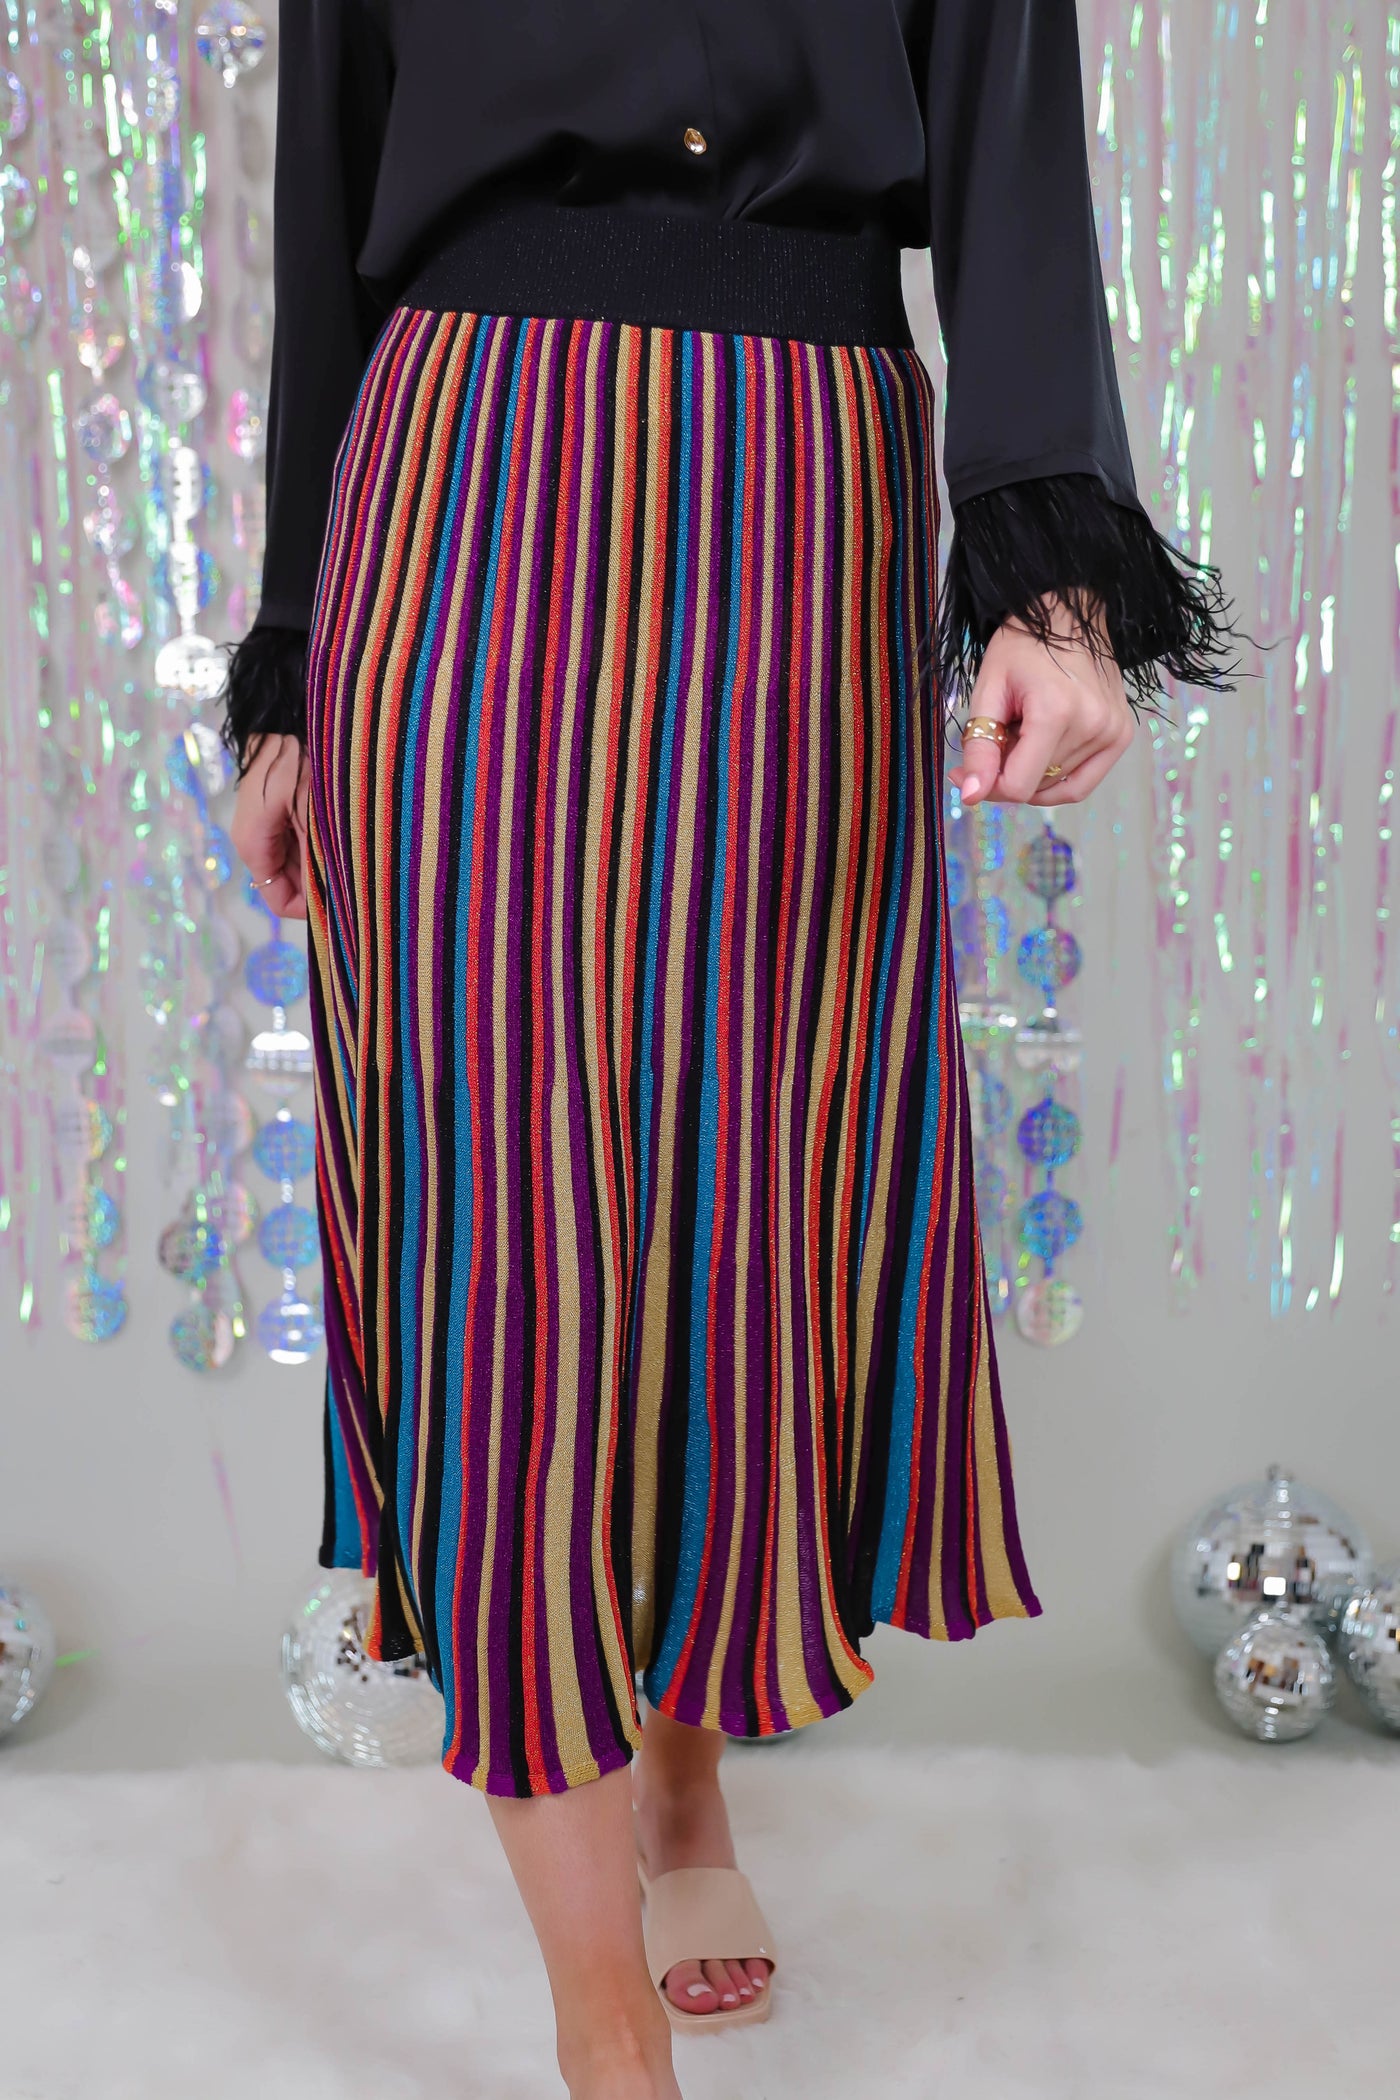 Multi Colored Striped Midi Skirt- Shimmery Striped Skirt